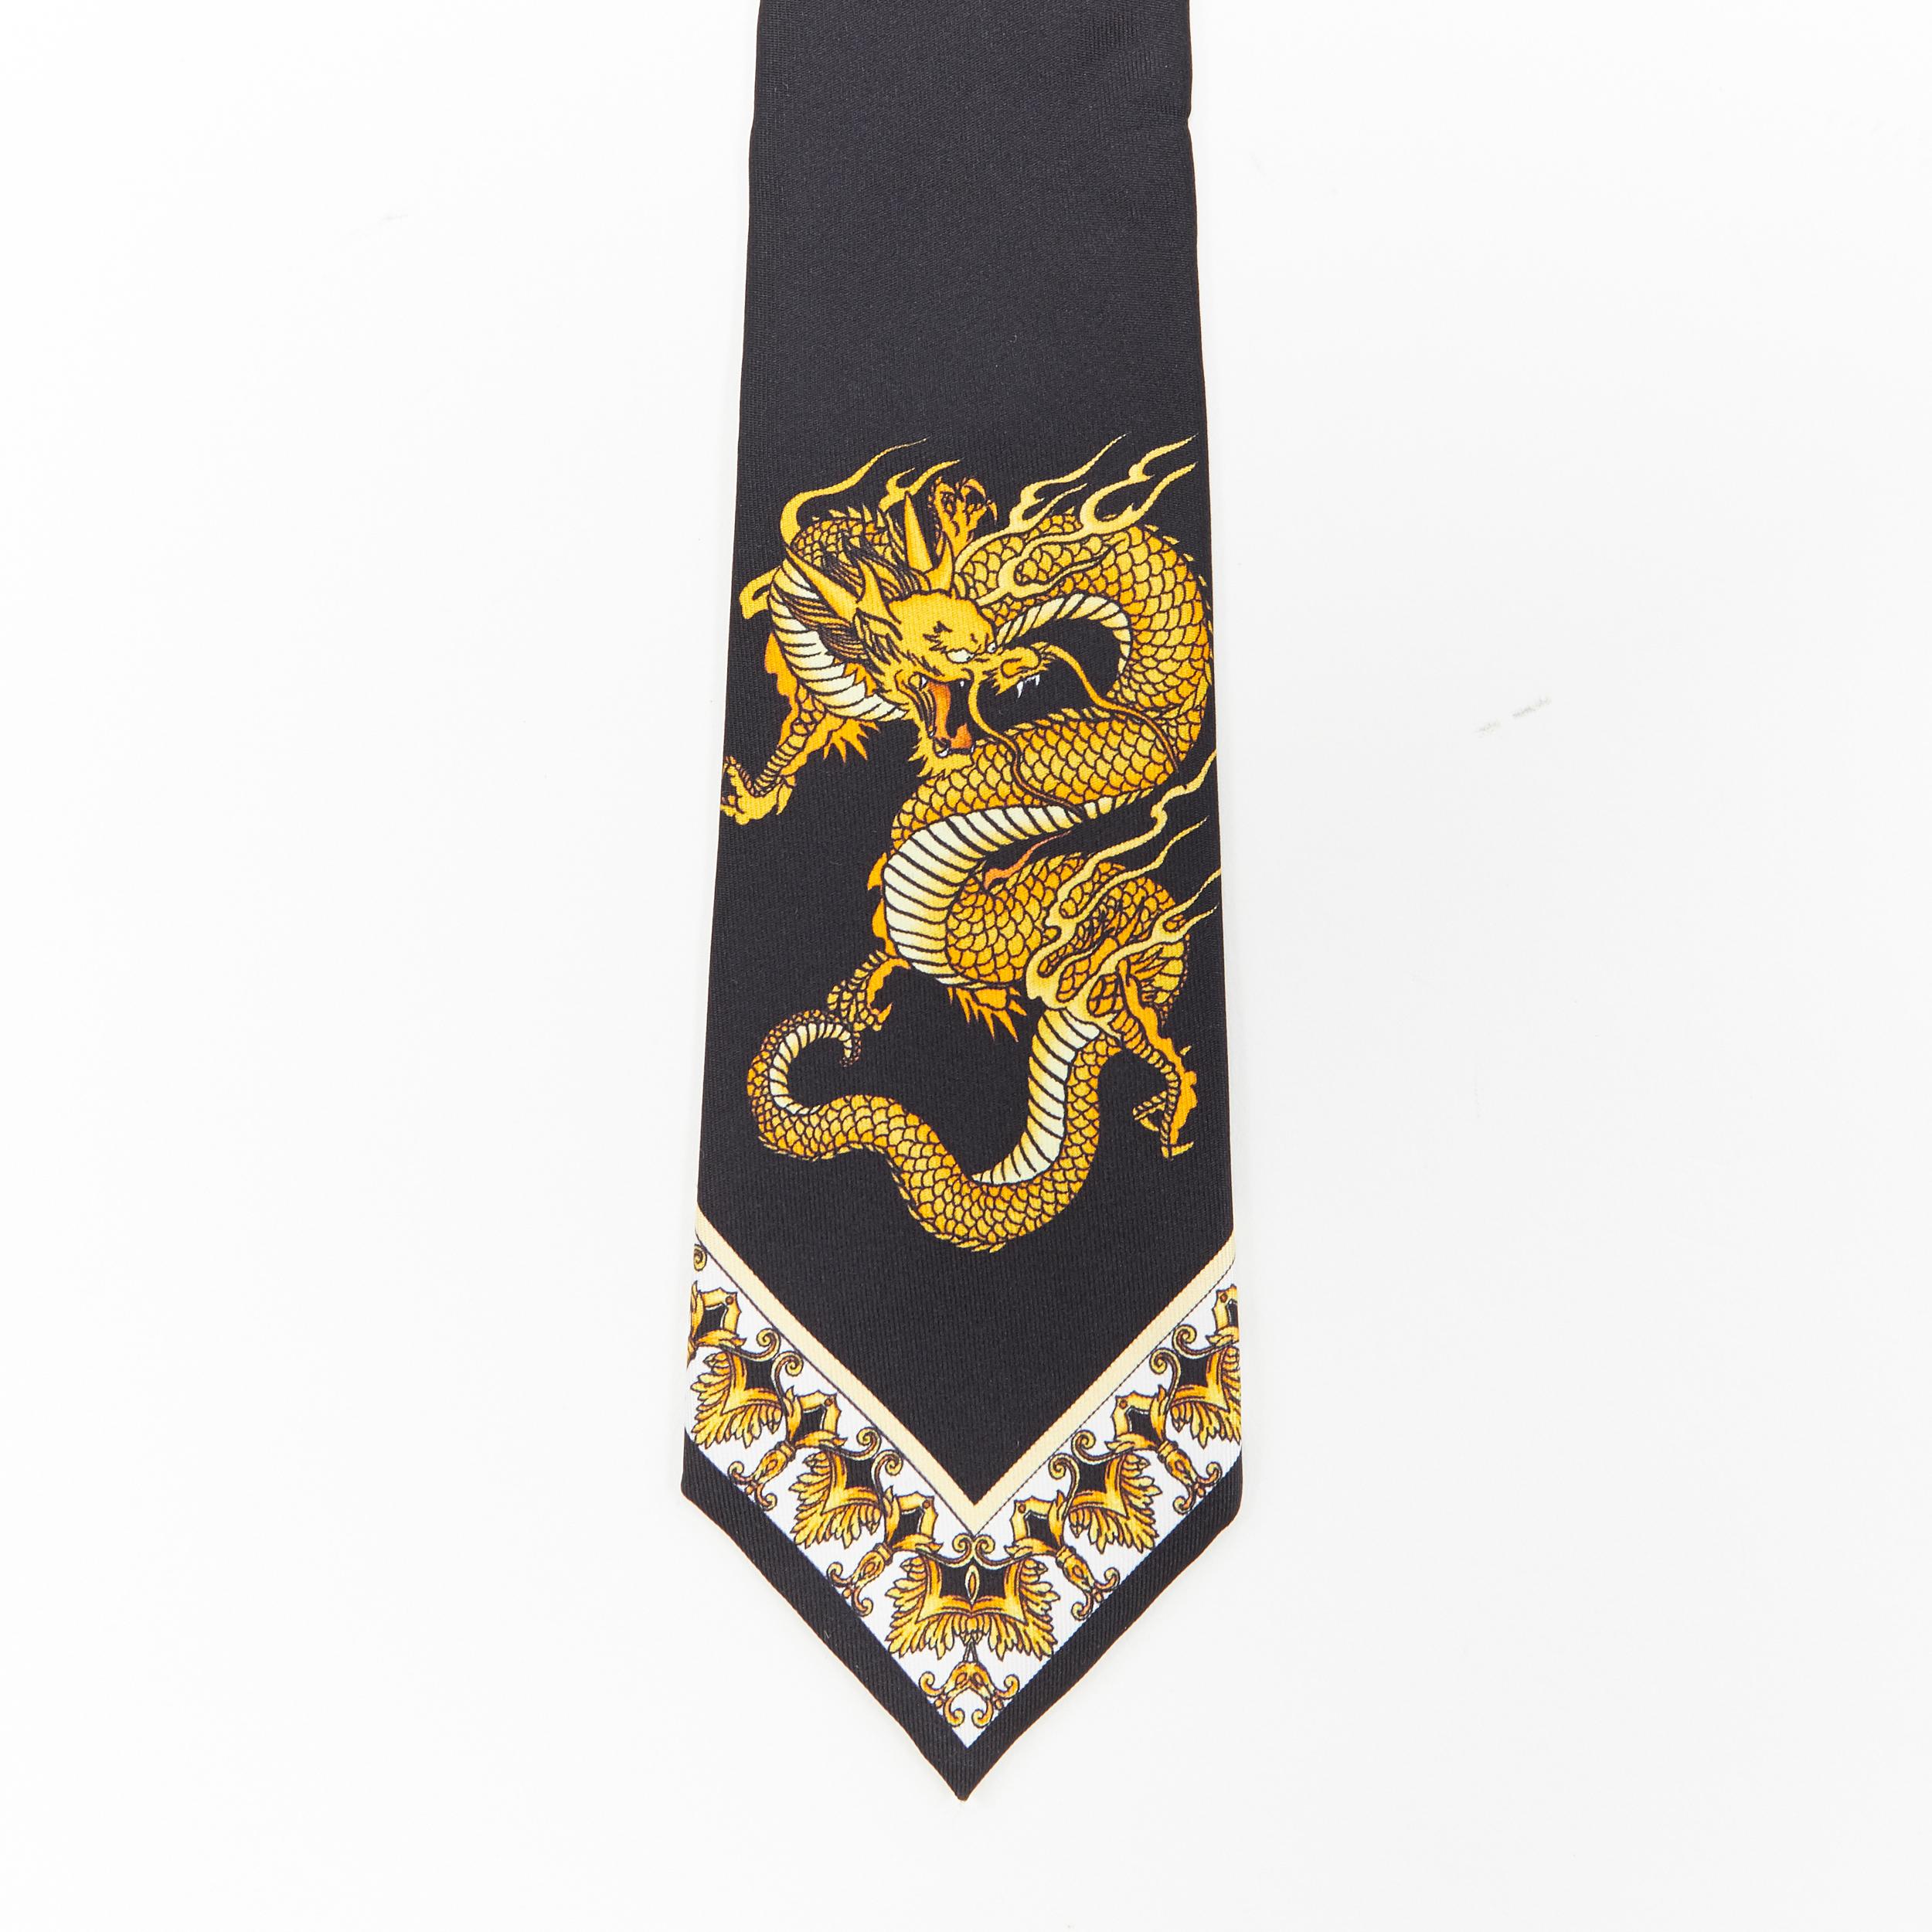 new VERSACE 100% silk print gold oriental dragon baroque slim tie
Brand: Versace
Designer: Donatella Versace
Model Name / Style: Dragon print tie
Material: Silk
Color: Black, gold
Pattern: Abstract; dragon print
Extra Detail: Slim tie. Medusa head